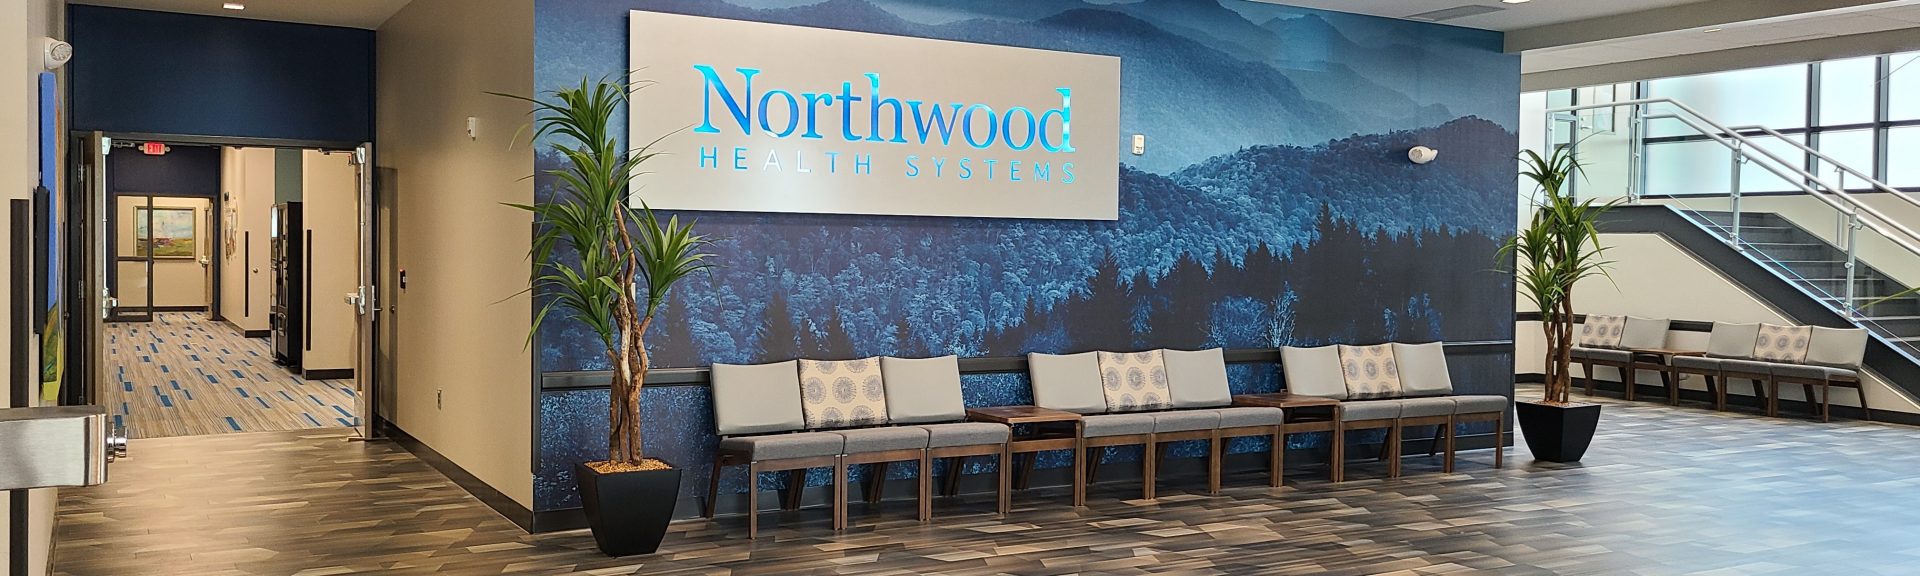 Northwood Health Systems